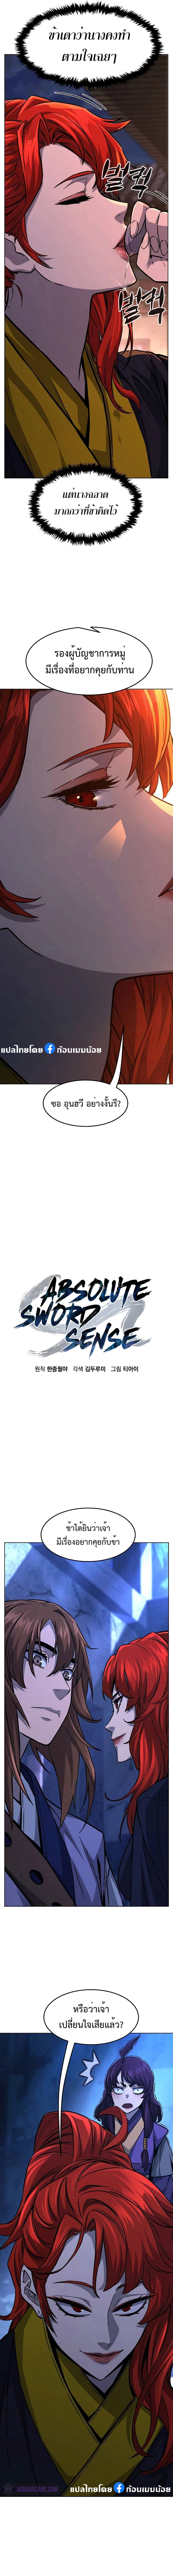 Absolute Sword Sense 80 (5)